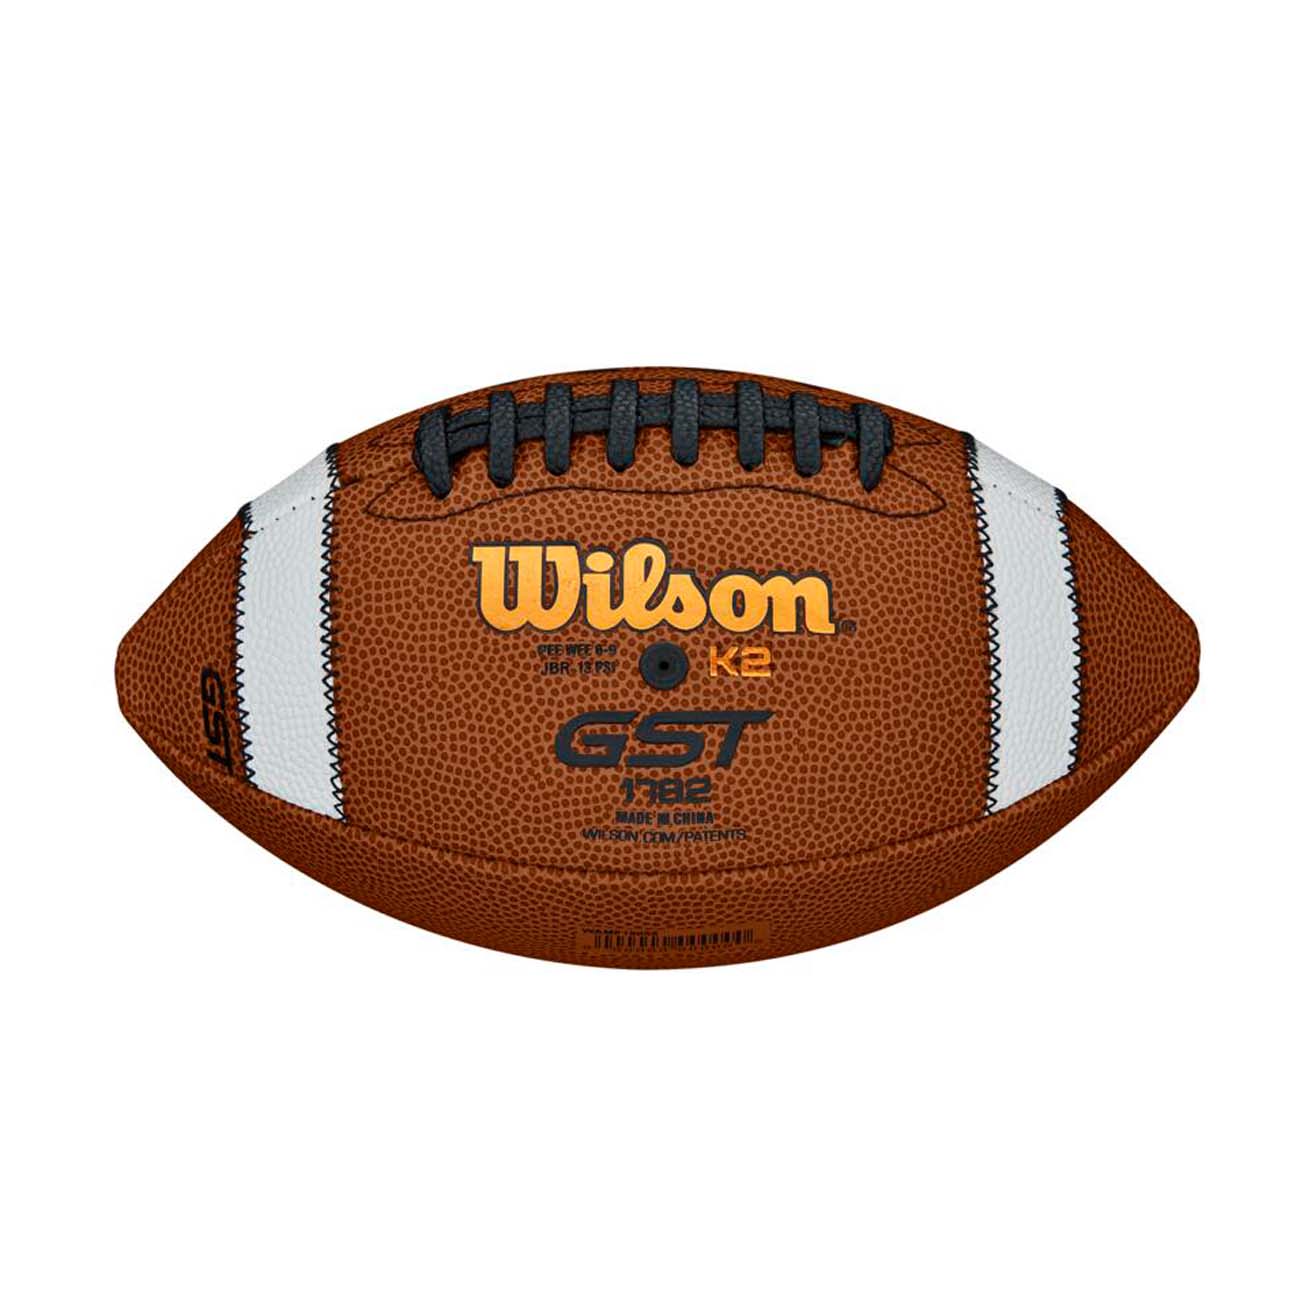 Wilson GST W Composite - K2 Pee Wee Football